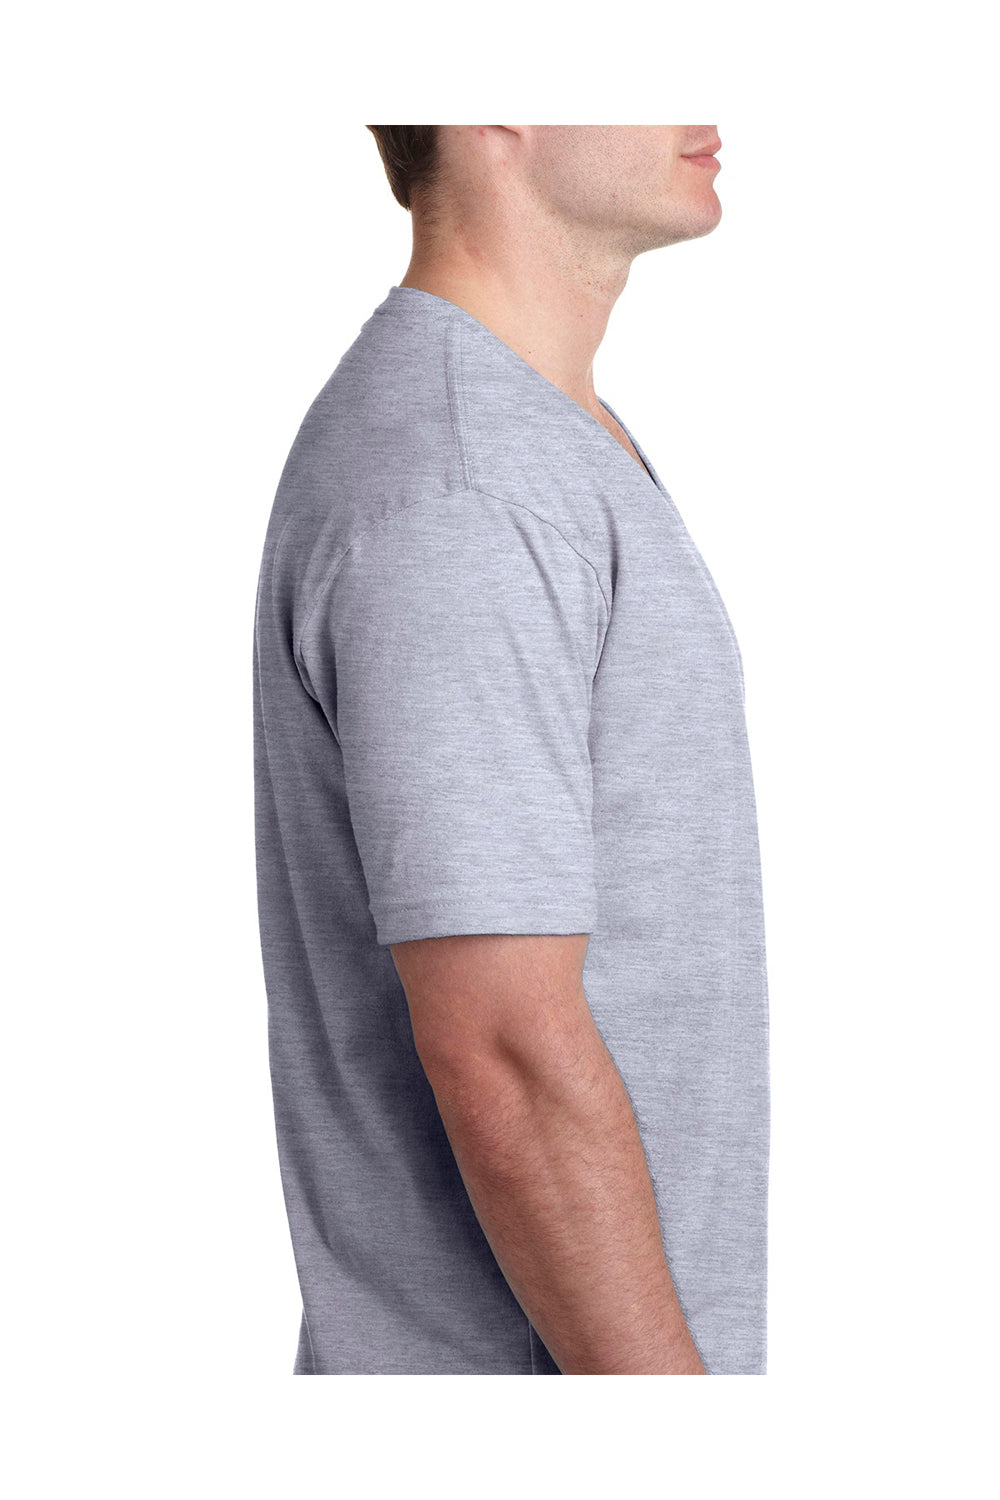 Next Level N3200 Mens Fine Jersey Short Sleeve V-Neck T-Shirt Heather Grey Side